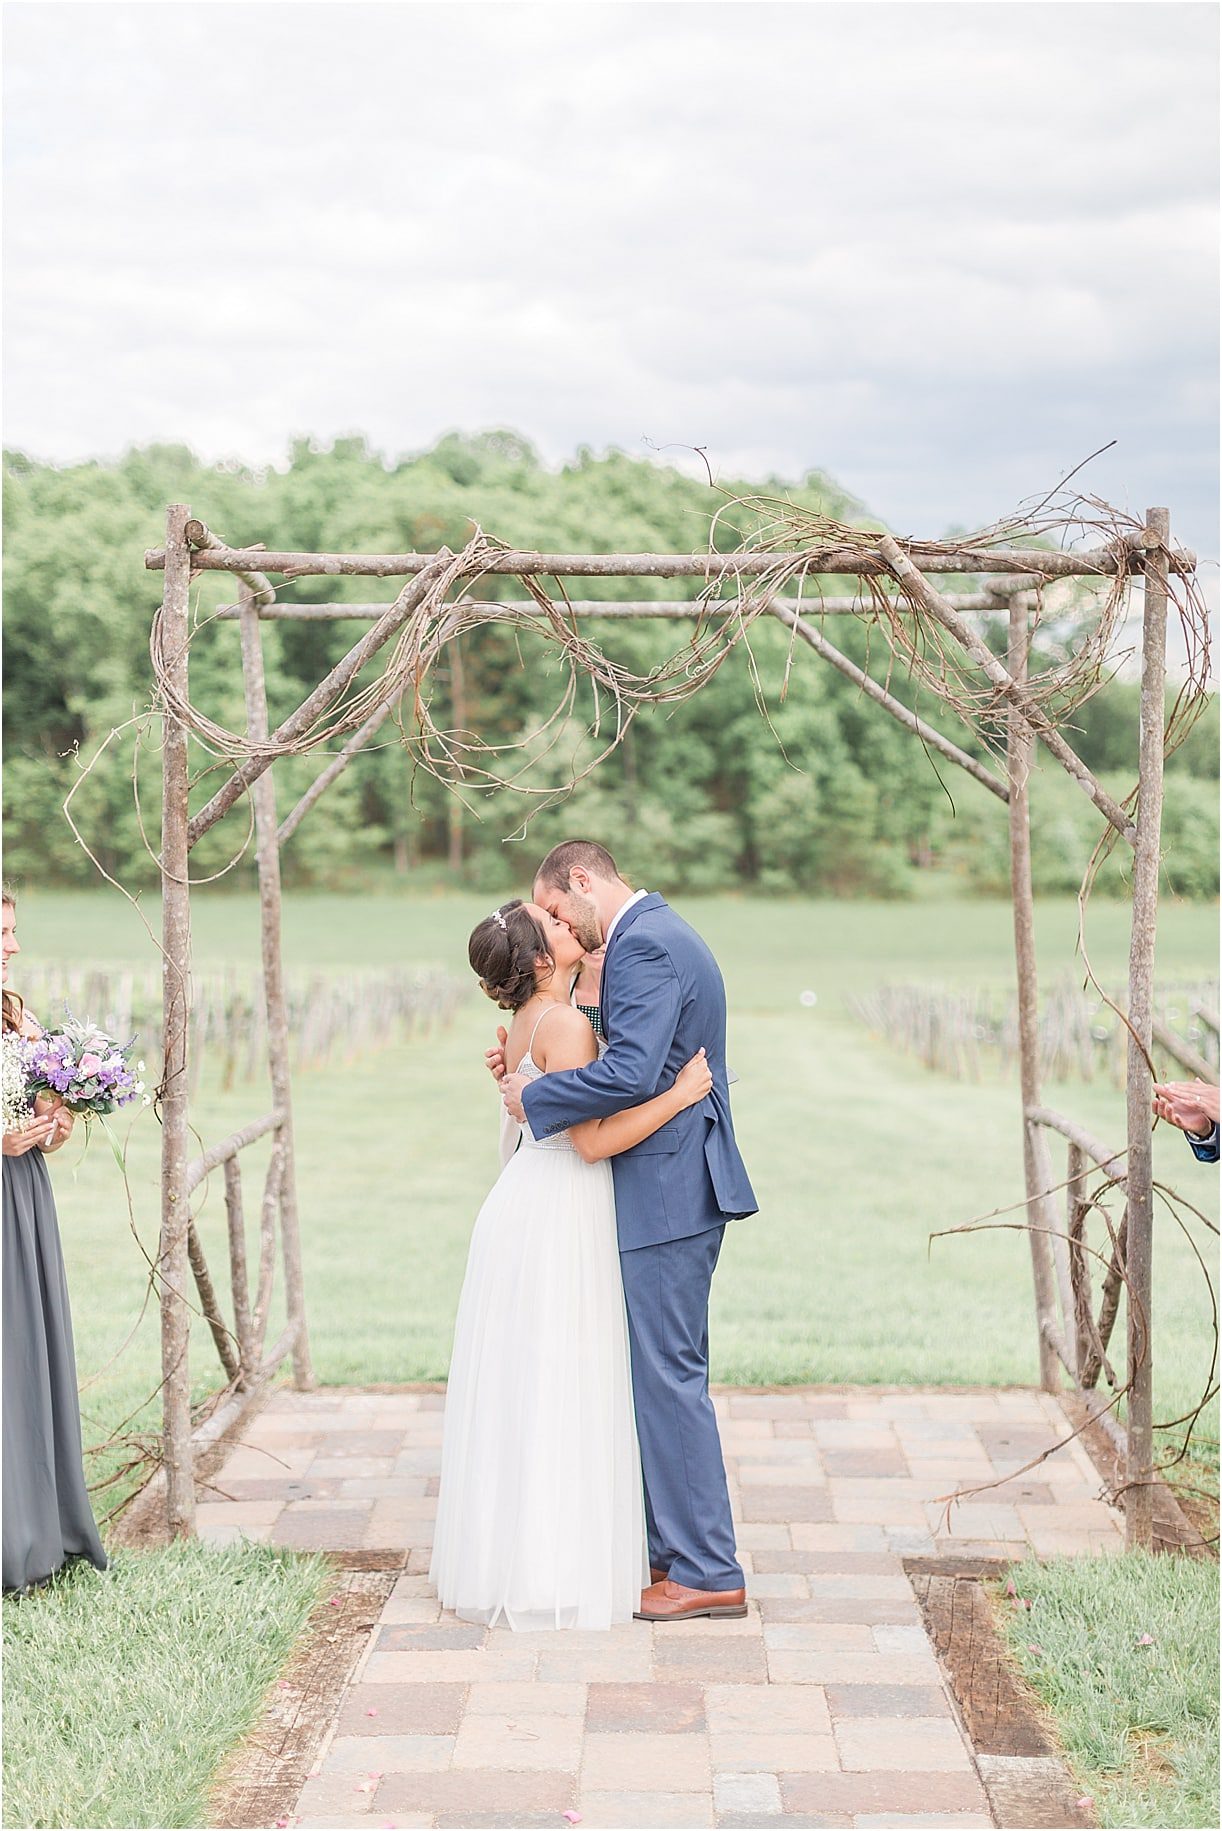 Spring Vineyard Wedding | Hill City Bride Virginia Wedding Blog - Jessica Green Photography - kiss